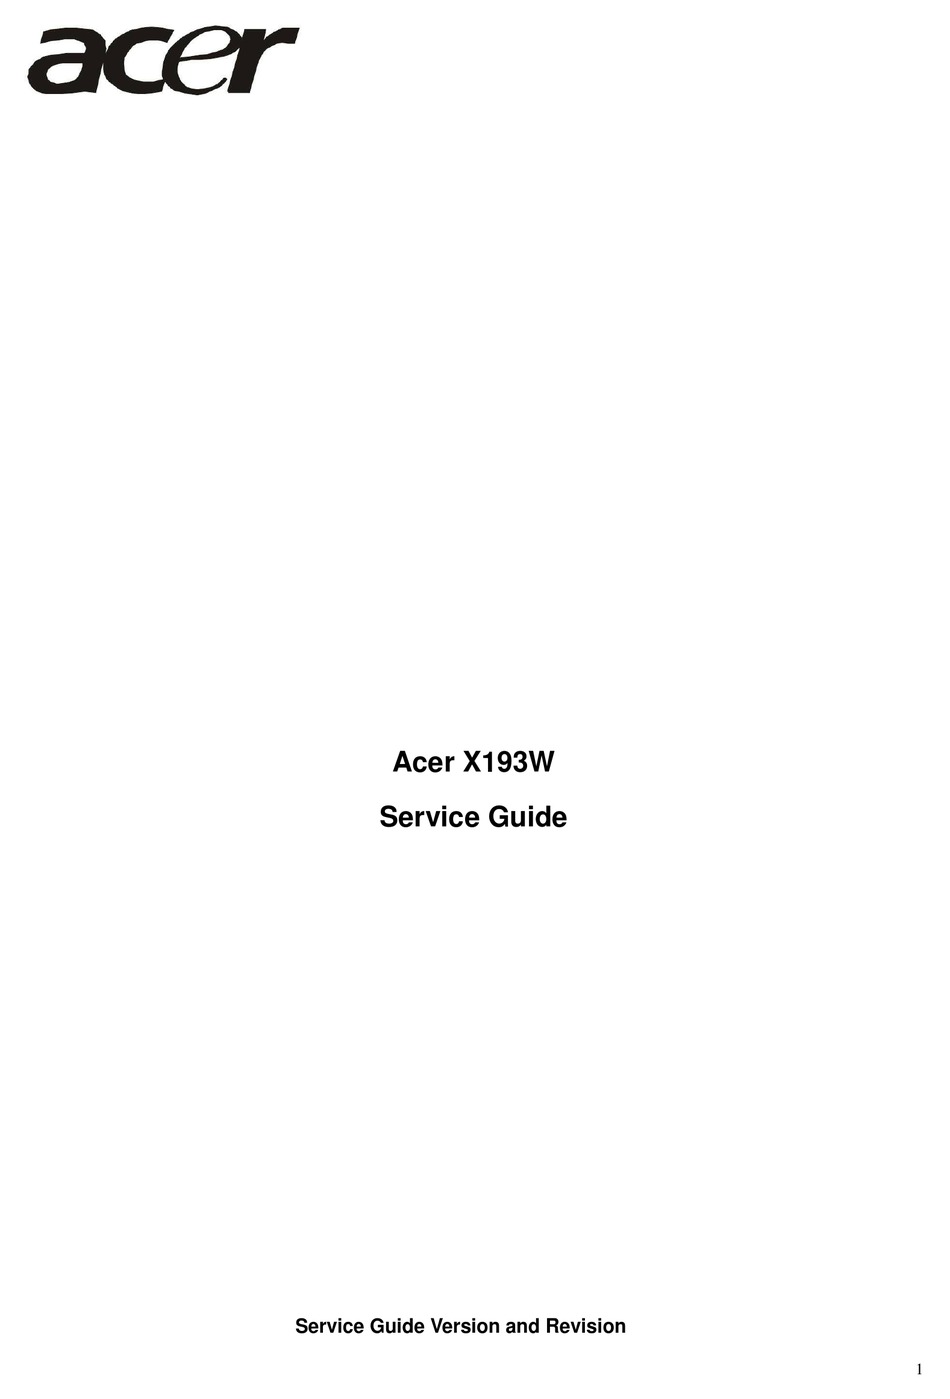 ACER X193W SERVICE MANUAL Pdf Download | ManualsLib